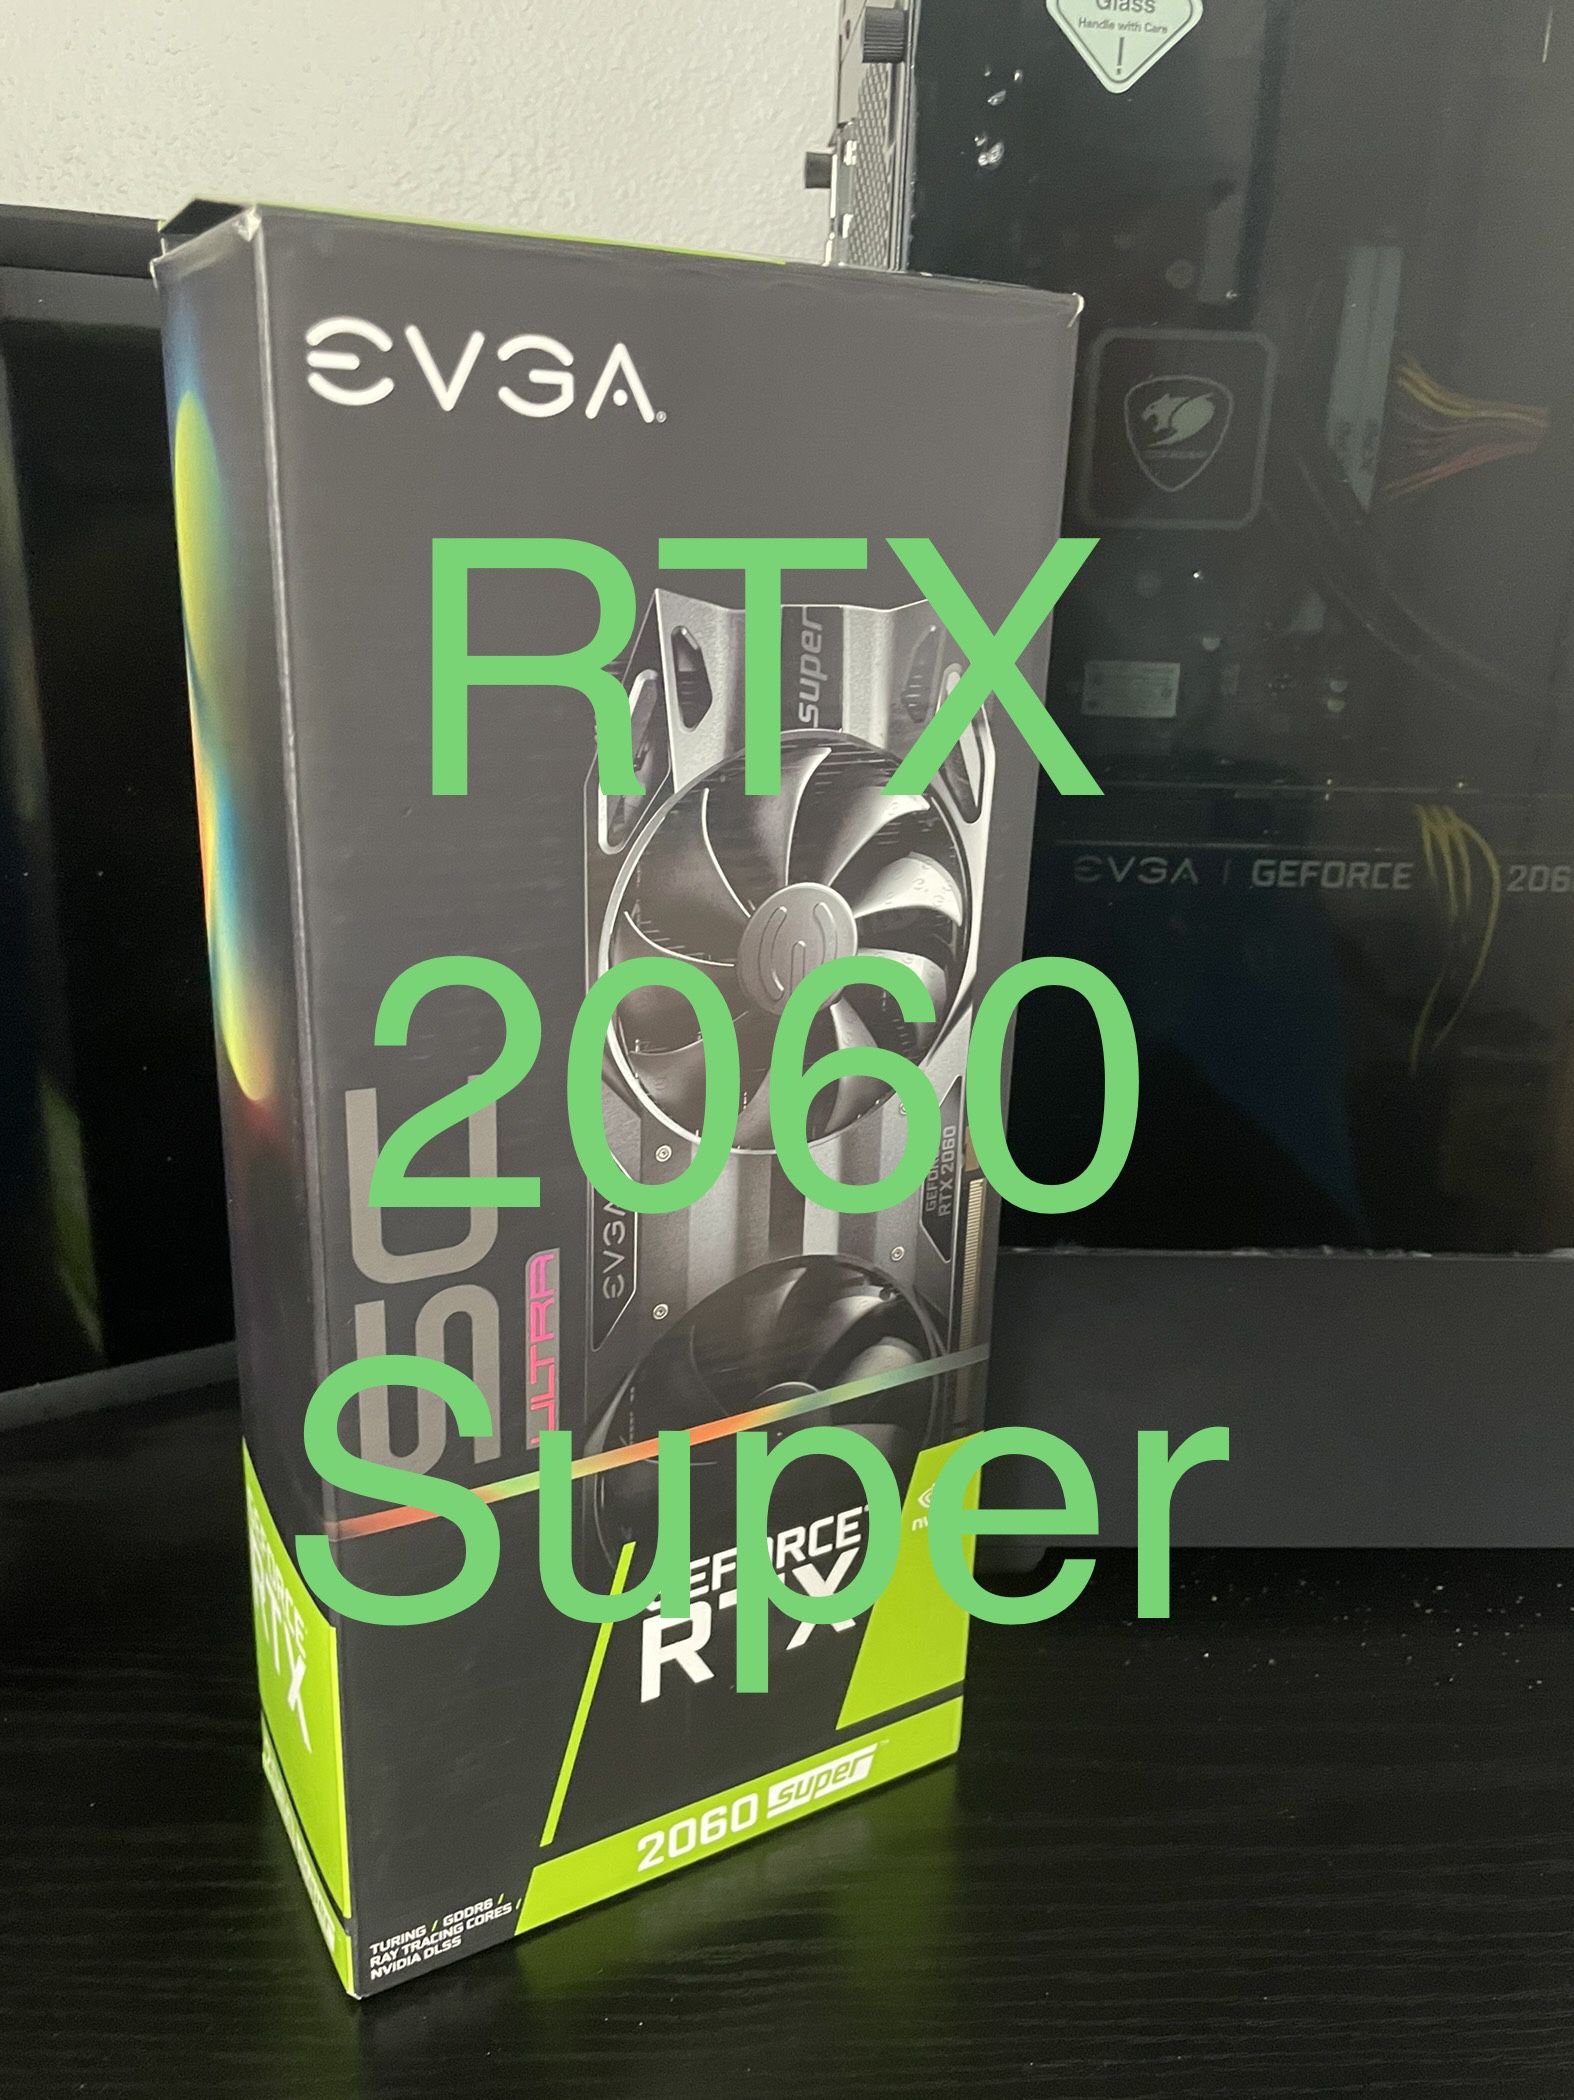 EVGA GeForce RTX 2060 Super